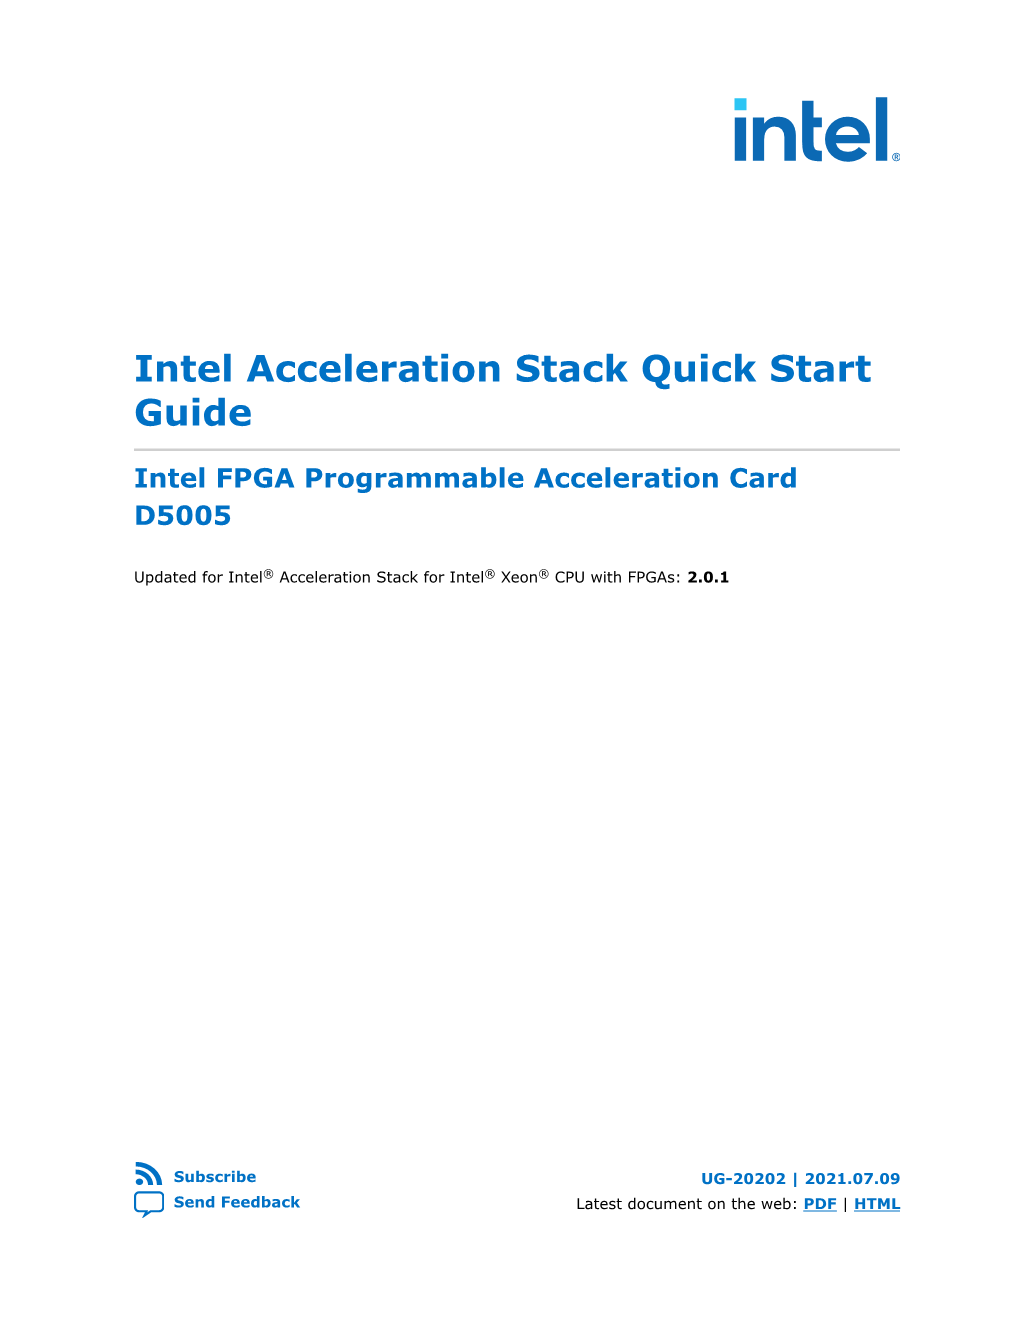 Intel FPGA Programmable Acceleration Card D5005